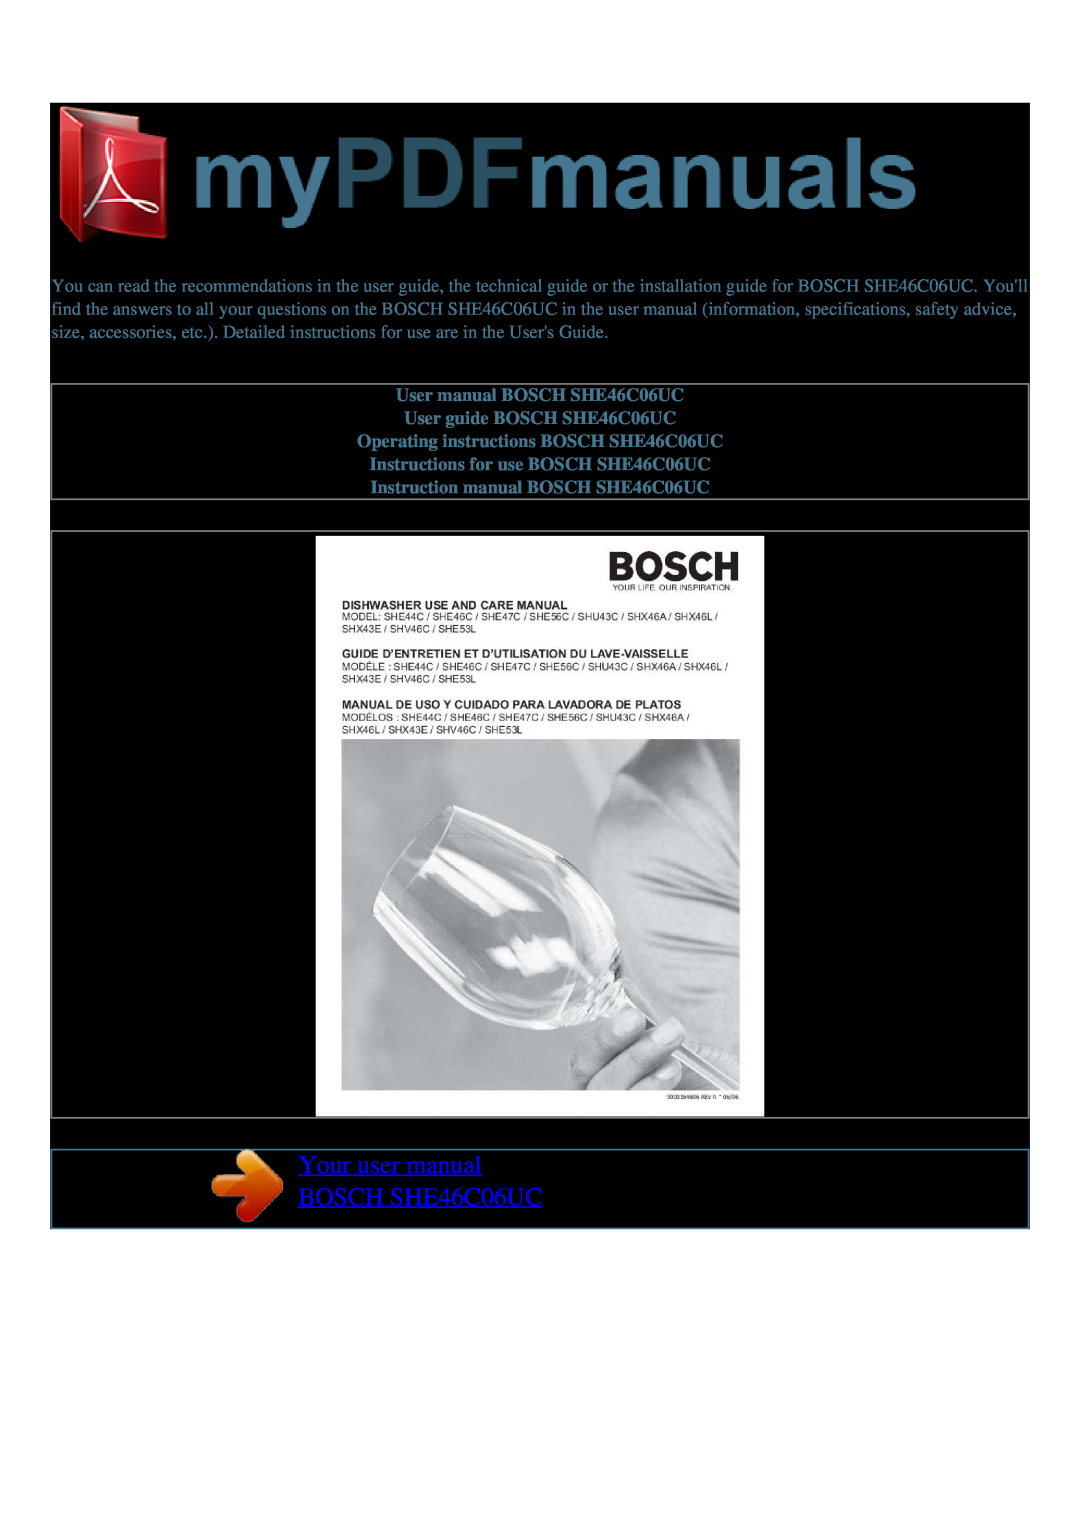 Bosch Appliances user manual User guide BOSCH SHE46C06UC, Operating instructions BOSCH SHE46C06UC 